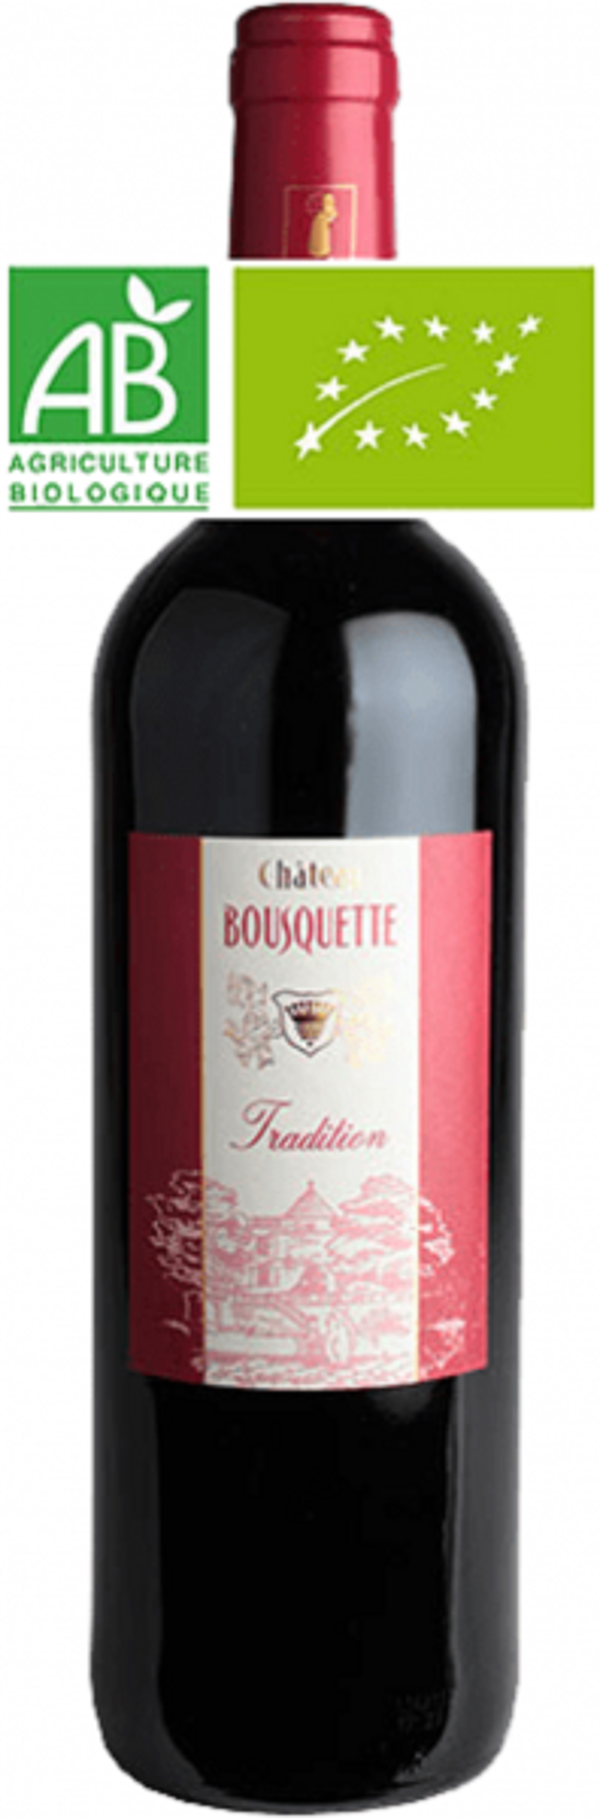 Produktfoto zu Chateau Bousquette Tradition rot, 0,75 l